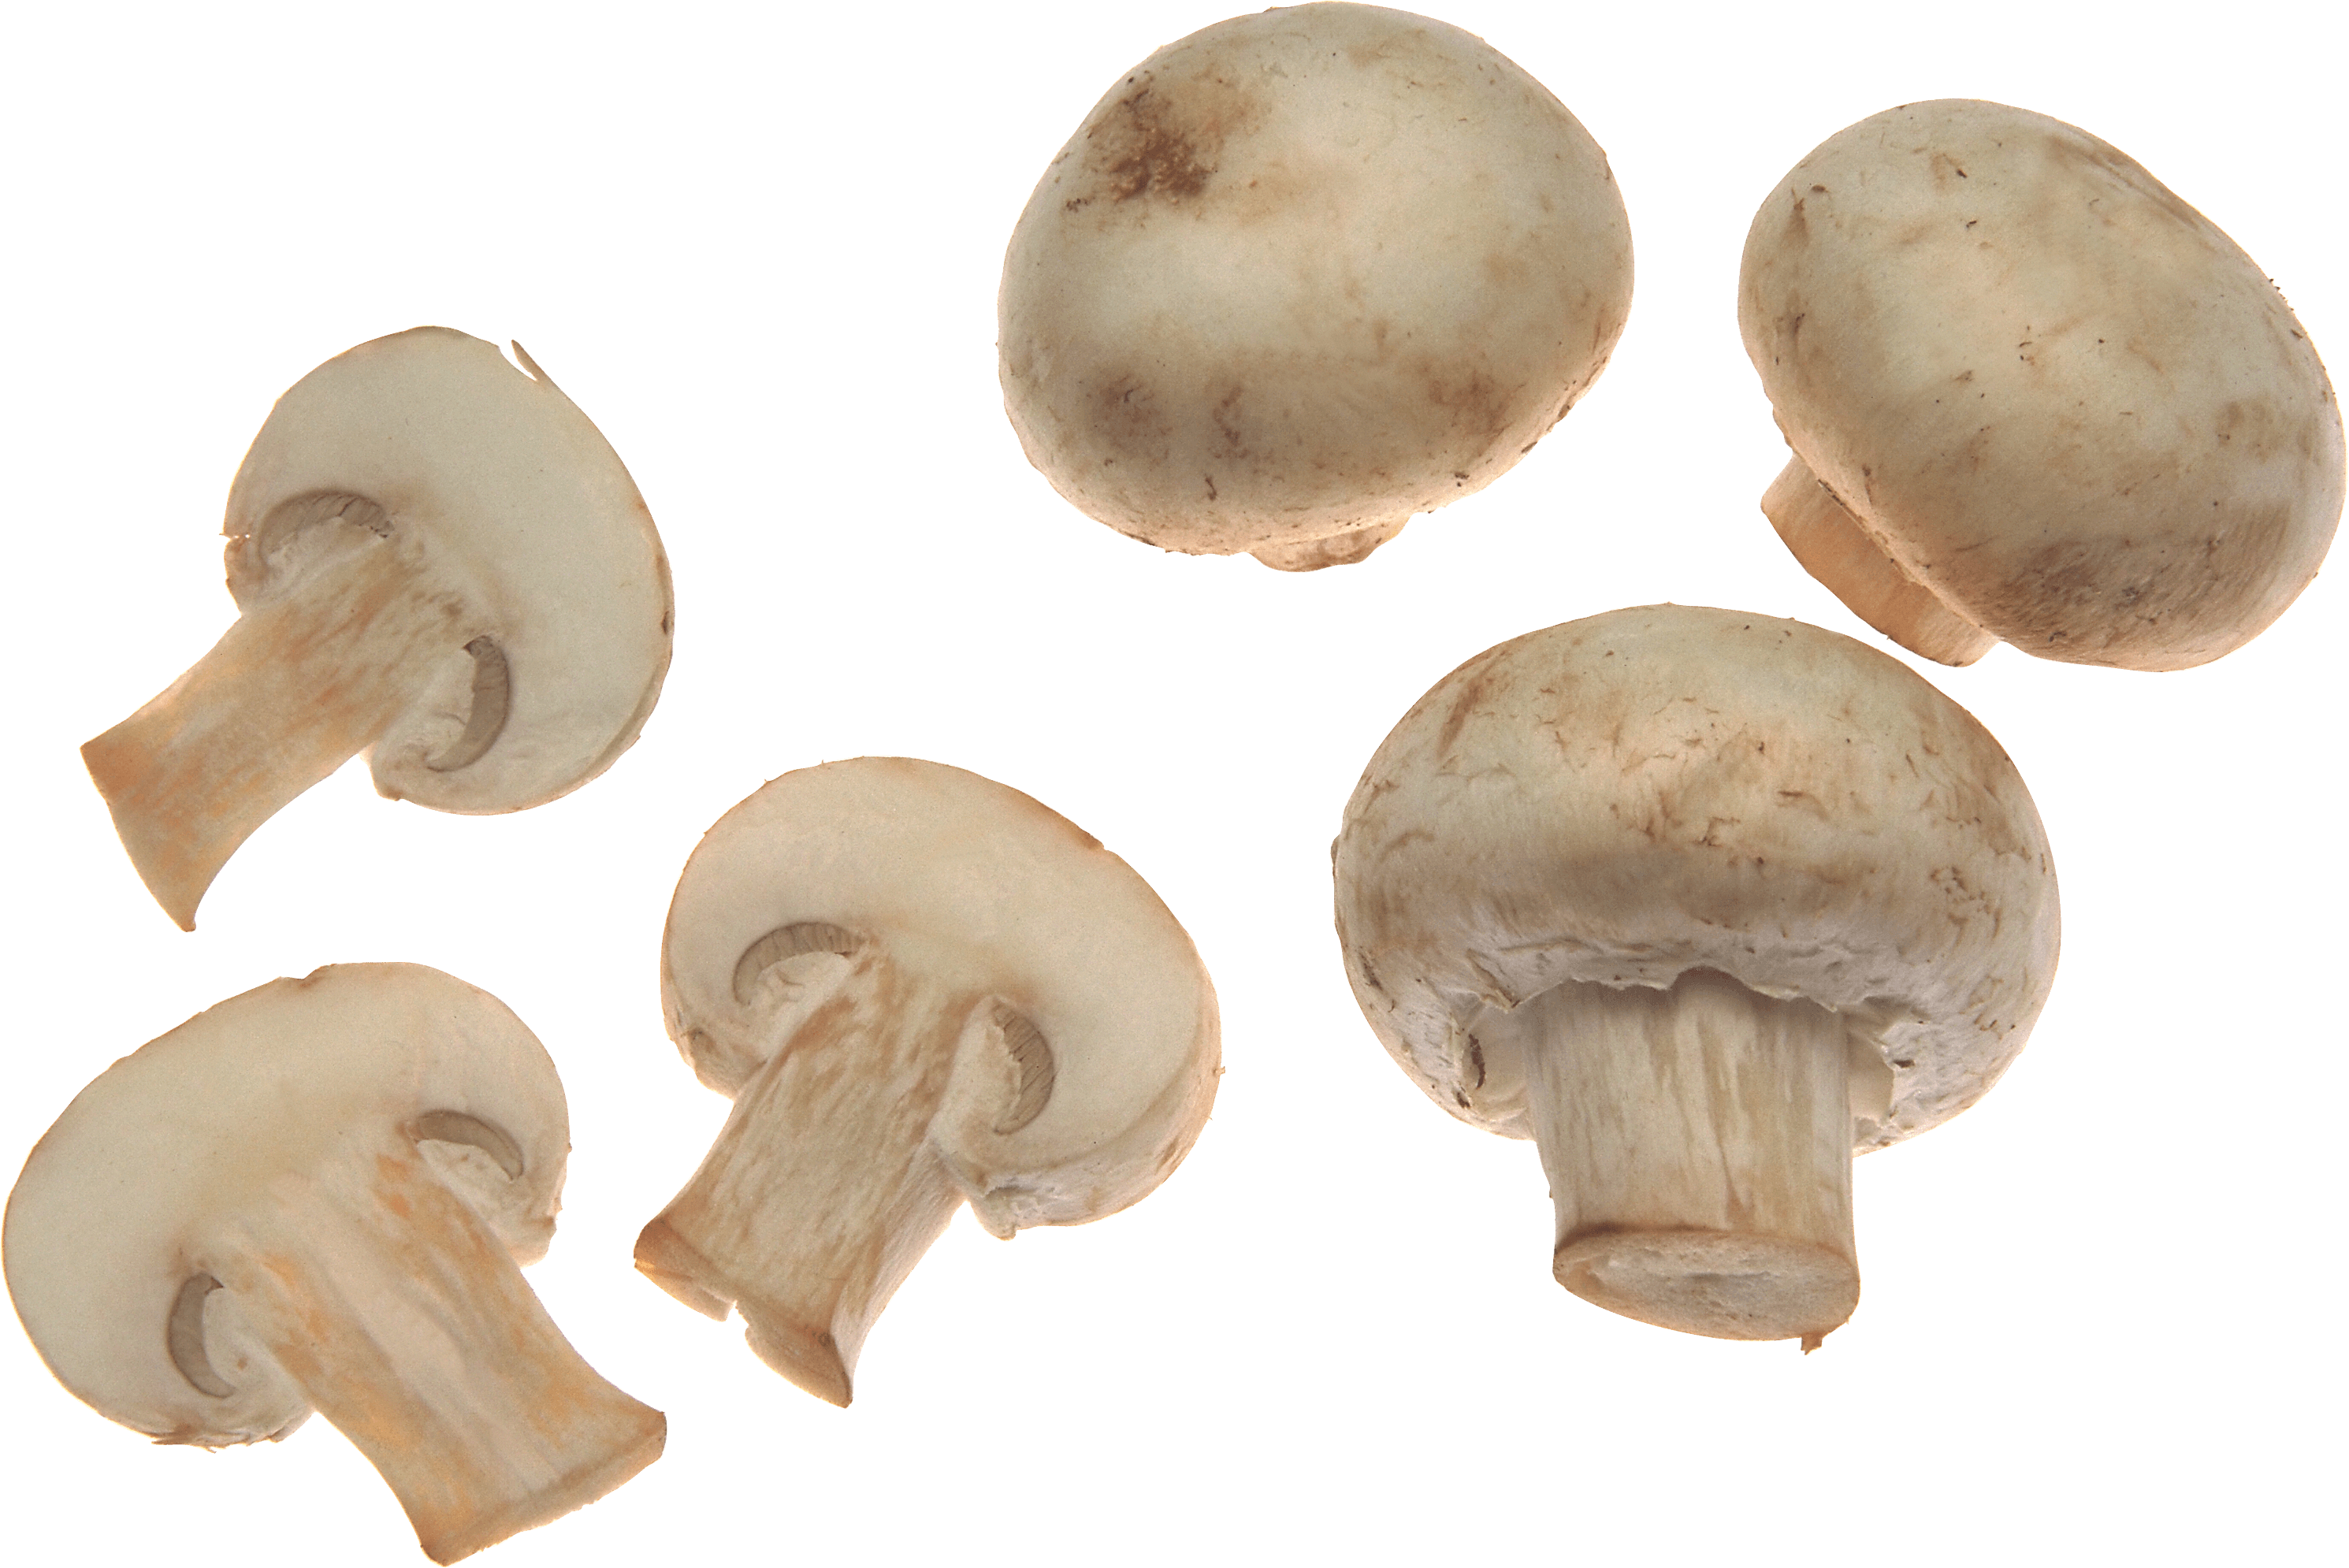 White Mushrooms Png Image PNG Image